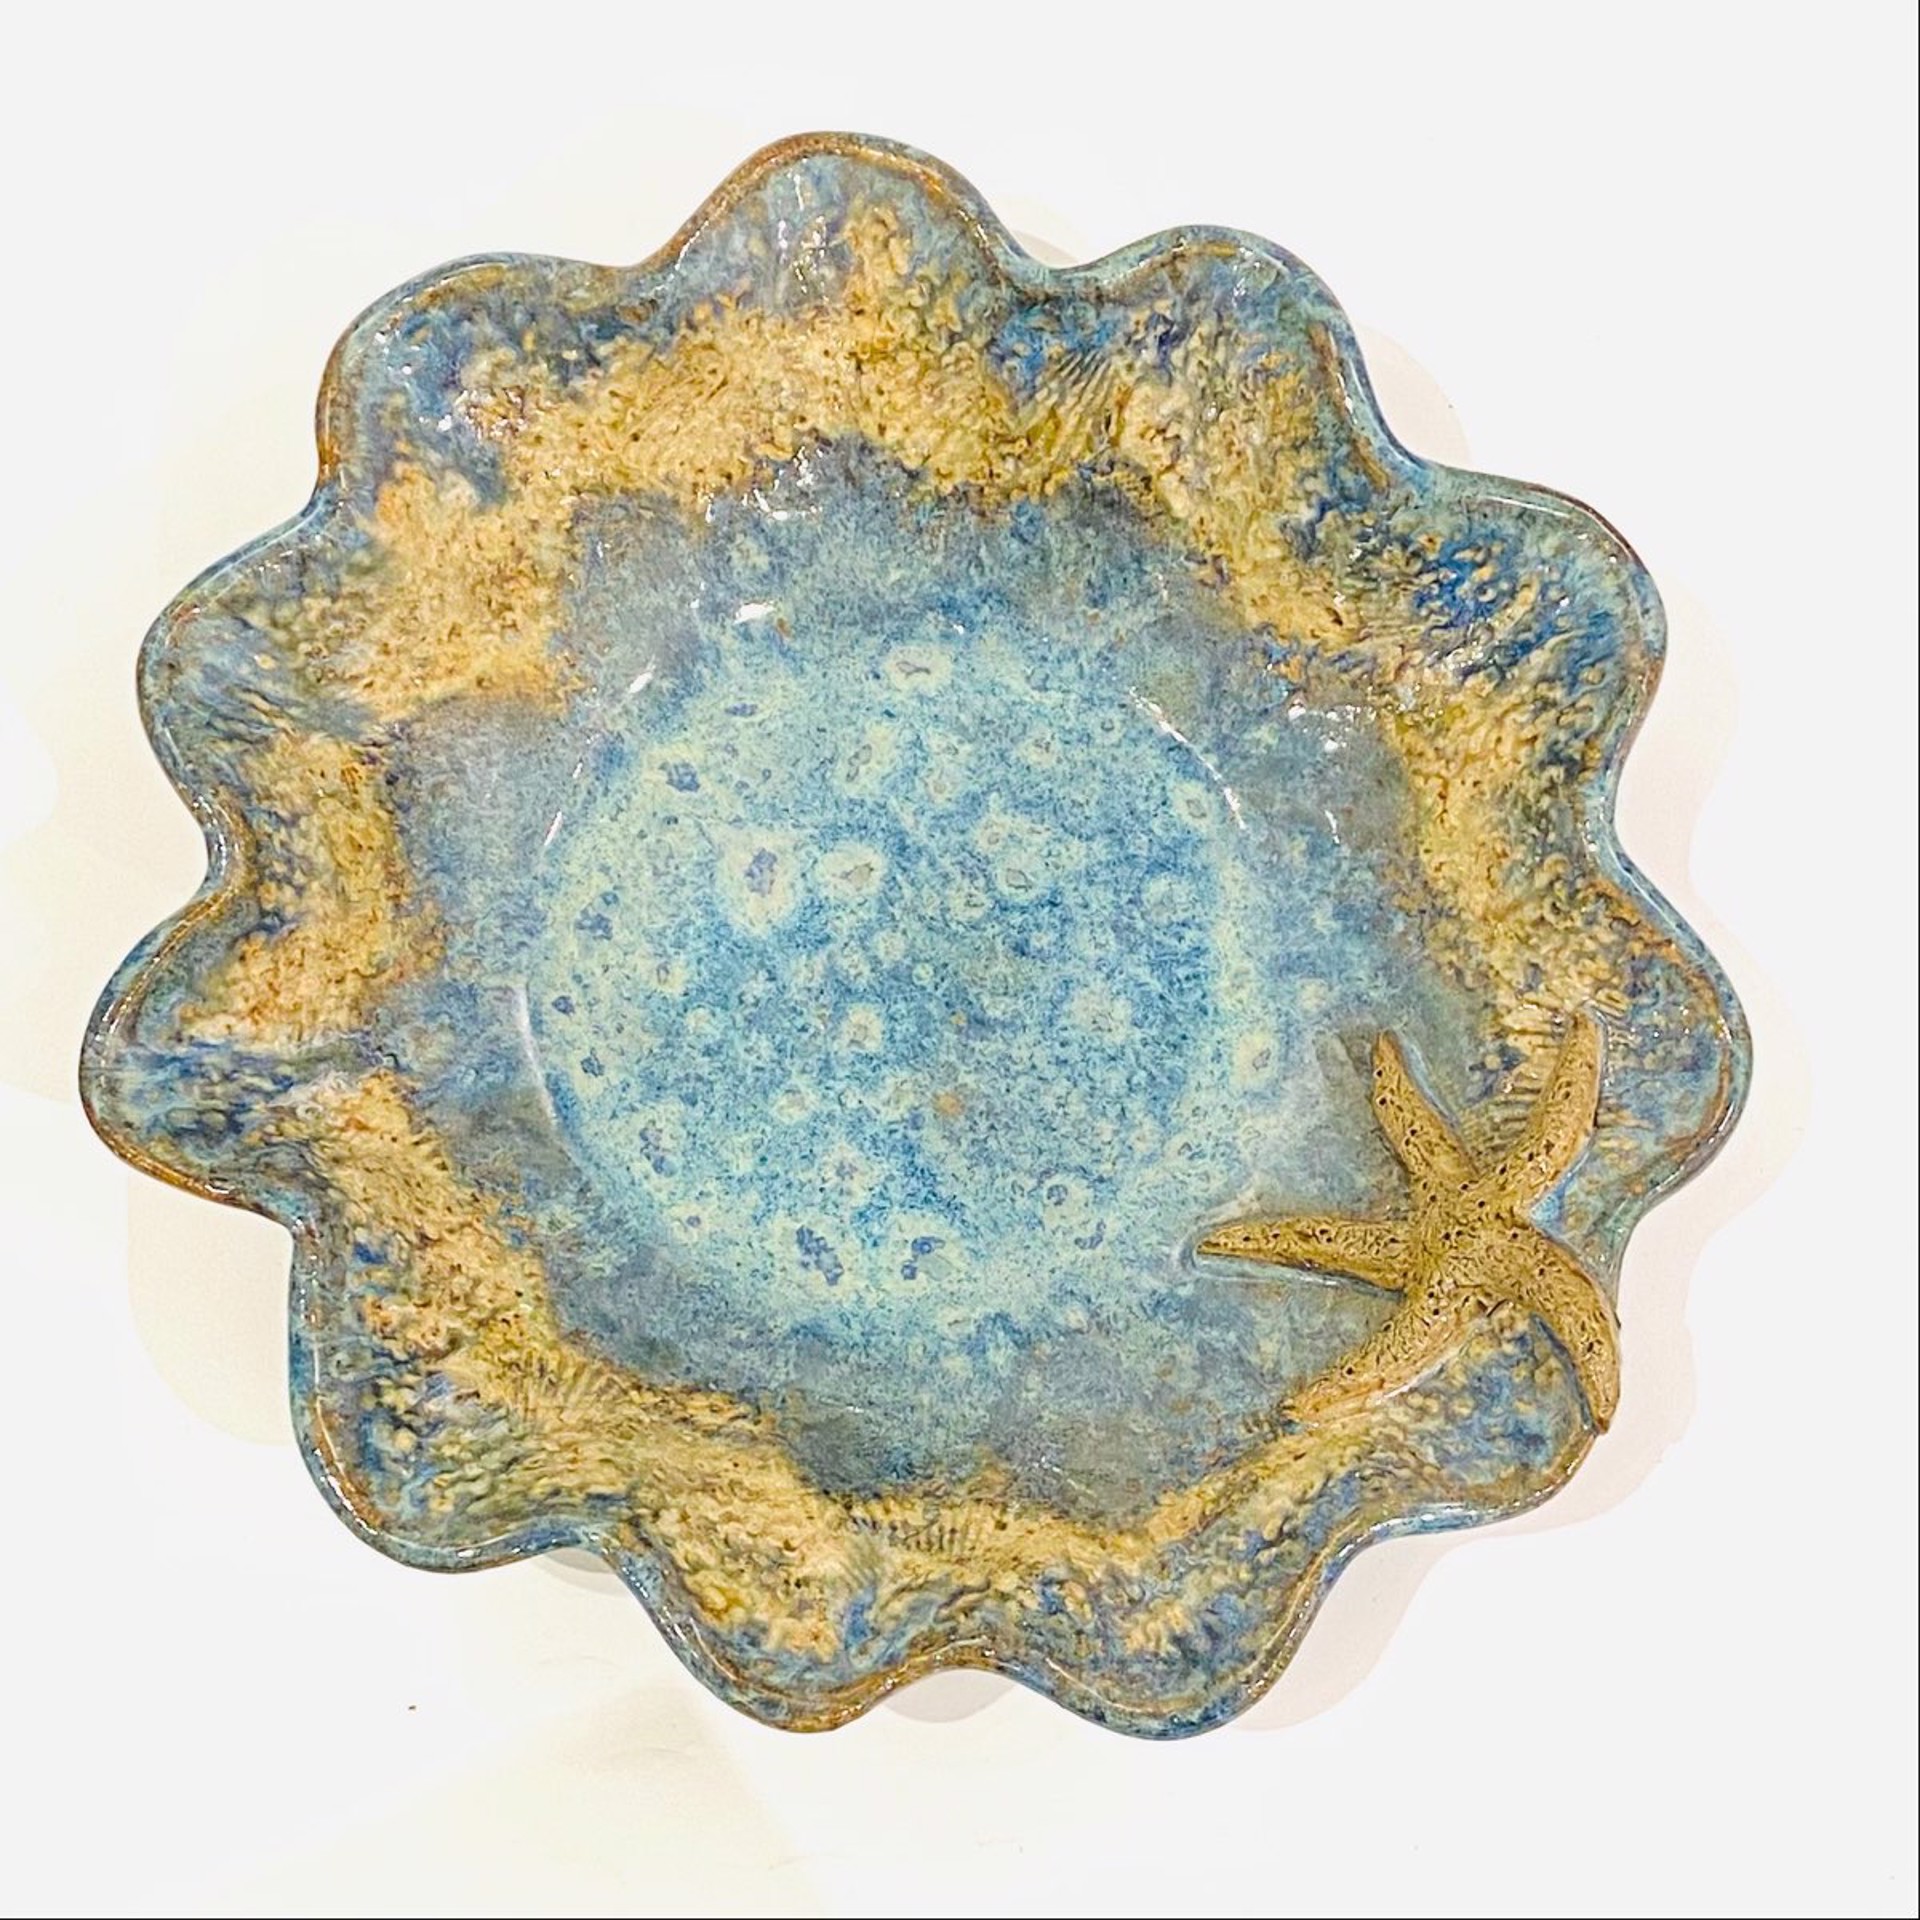 LG22-897 Medium Round Scalloped Bowl with Starfish (Blue Glaze) by Jim & Steffi Logan